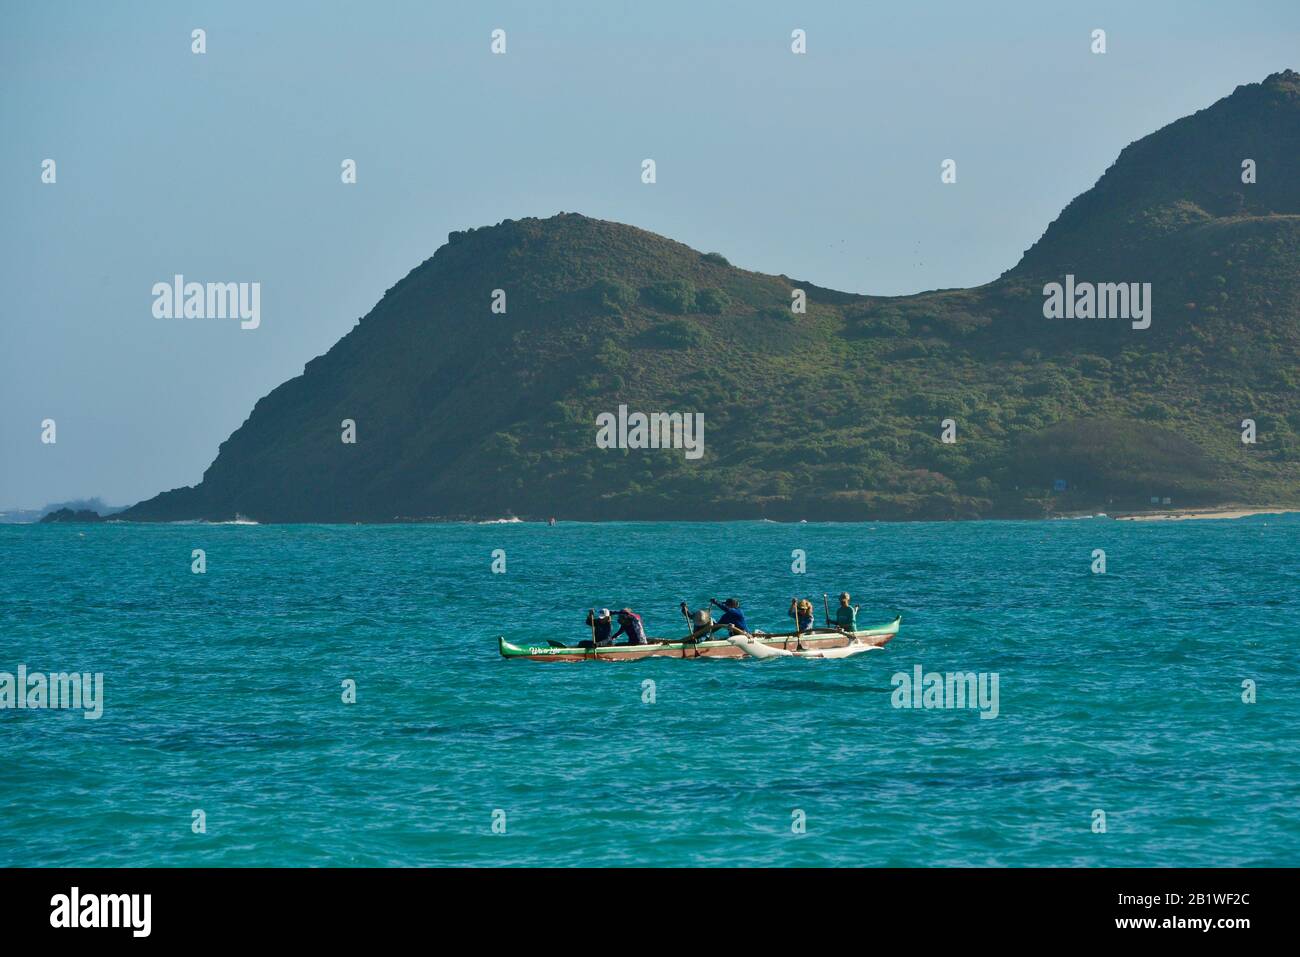 People paddling in outrigger canoe in turquoise waters off Lanikai Beach, Moku Nui island behind (part of Mokulua Islands), Oahu, Kailua, Hawaii, USA Stock Photo